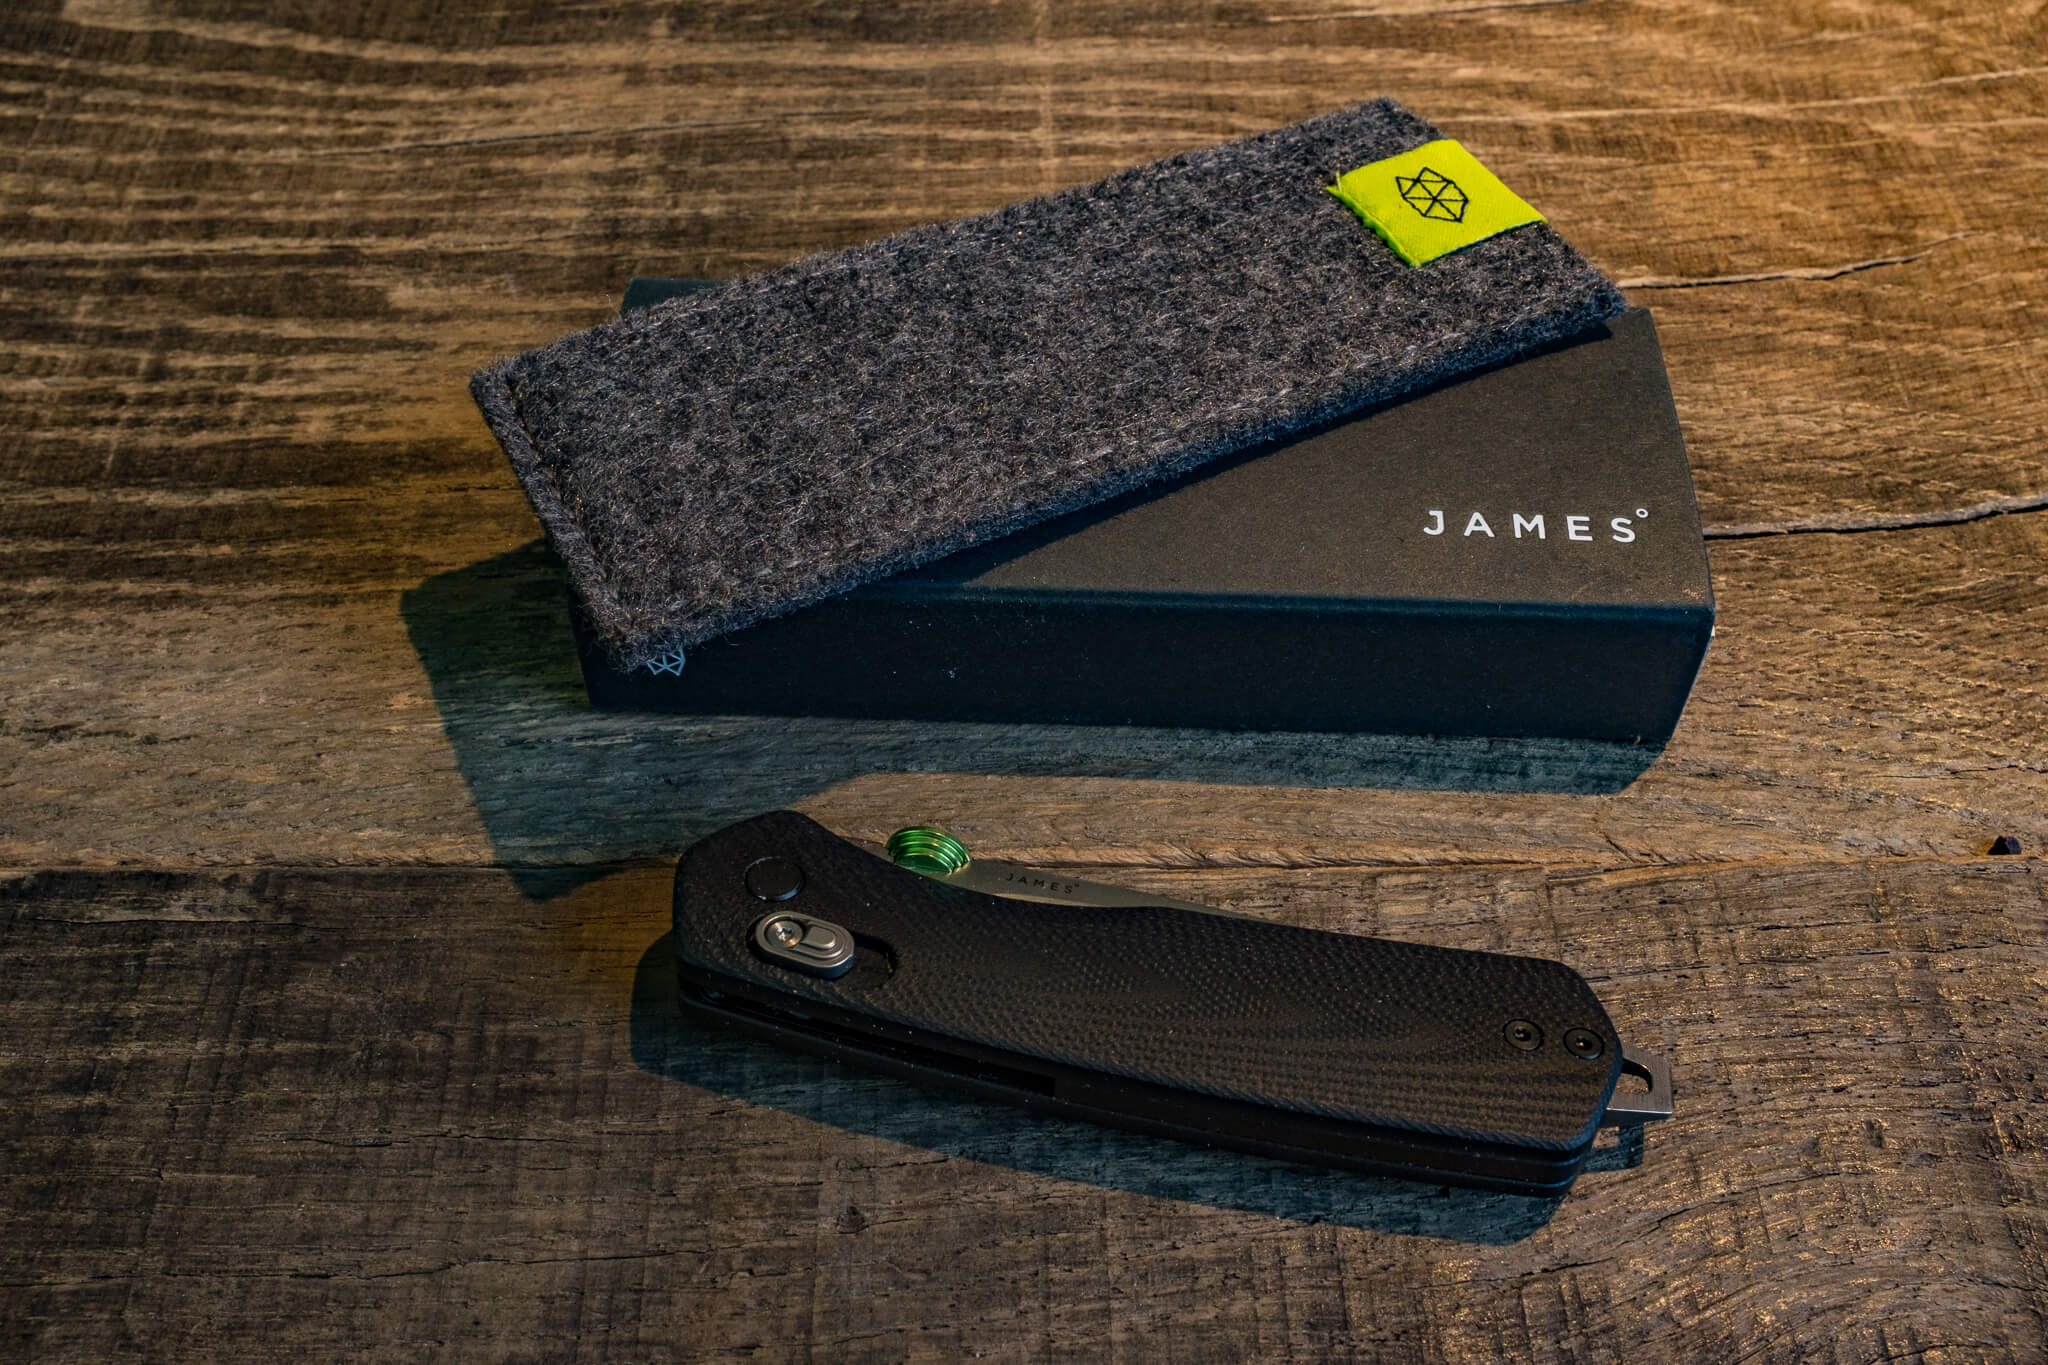 The beautiful James Knife | Duke & Sons Leather